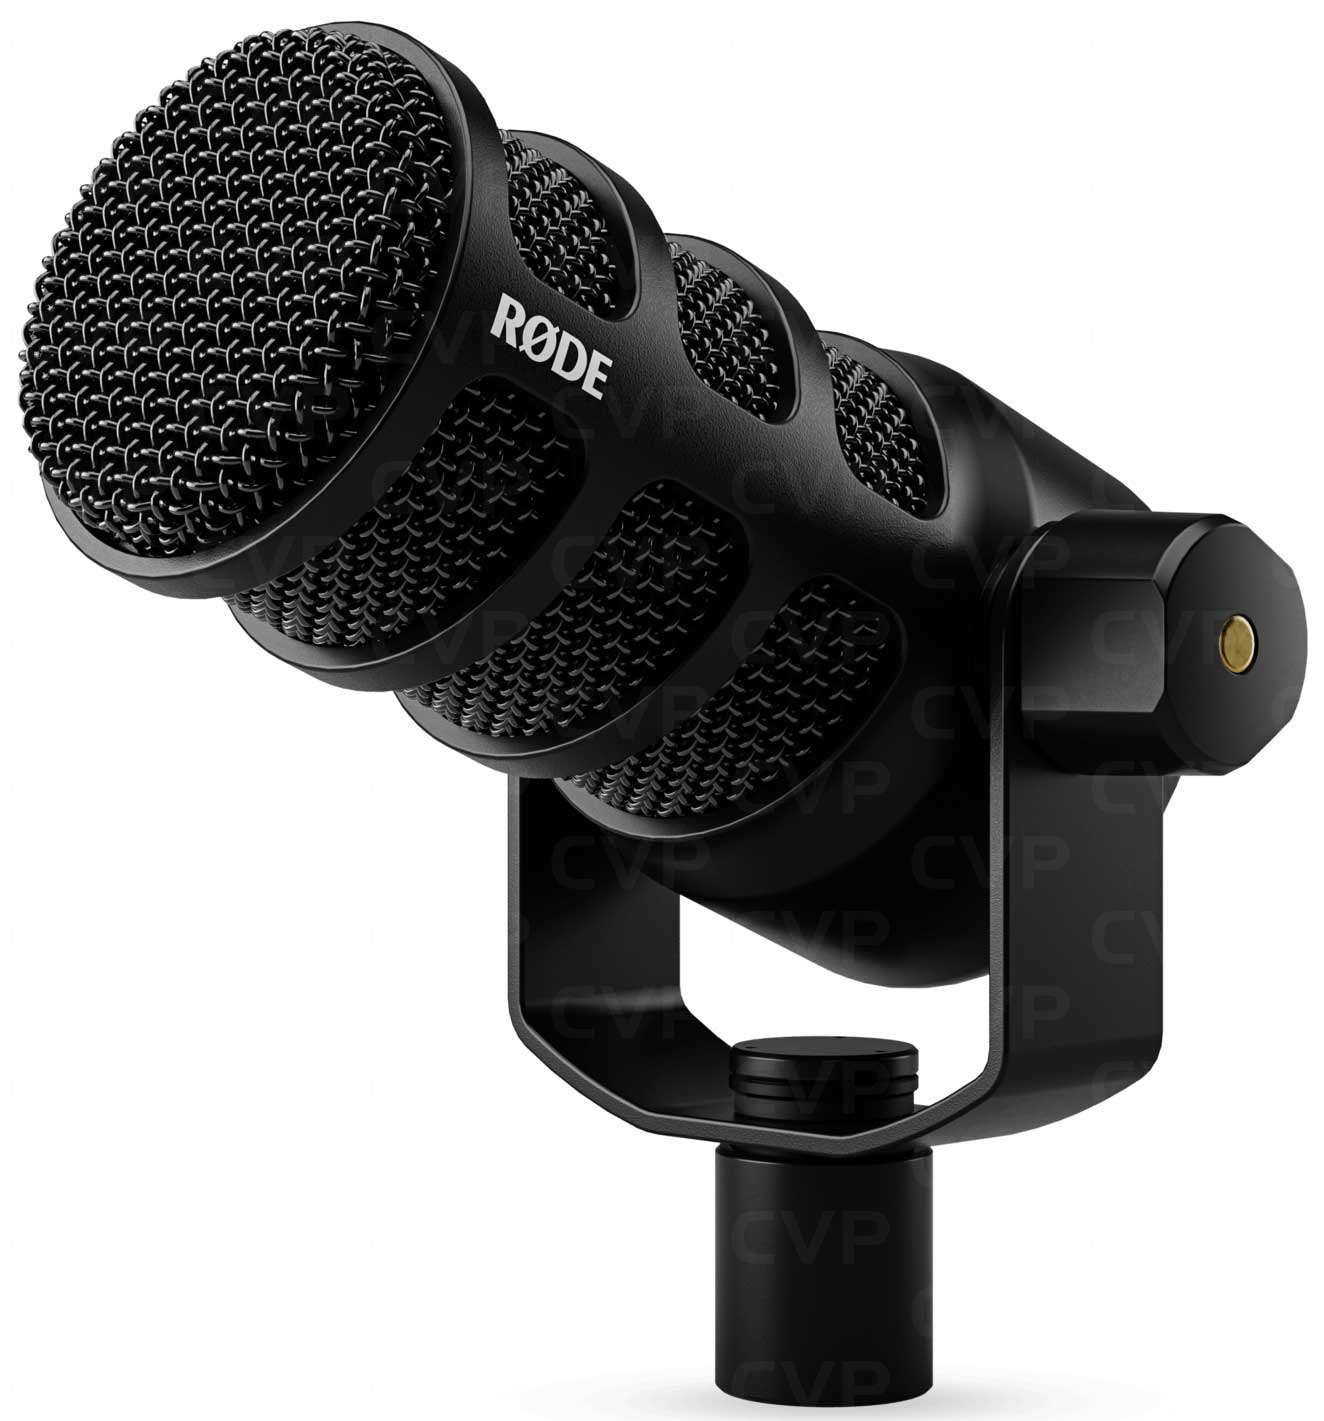 Rode PodMic USB Broadcast Quality Dynamic Microphone